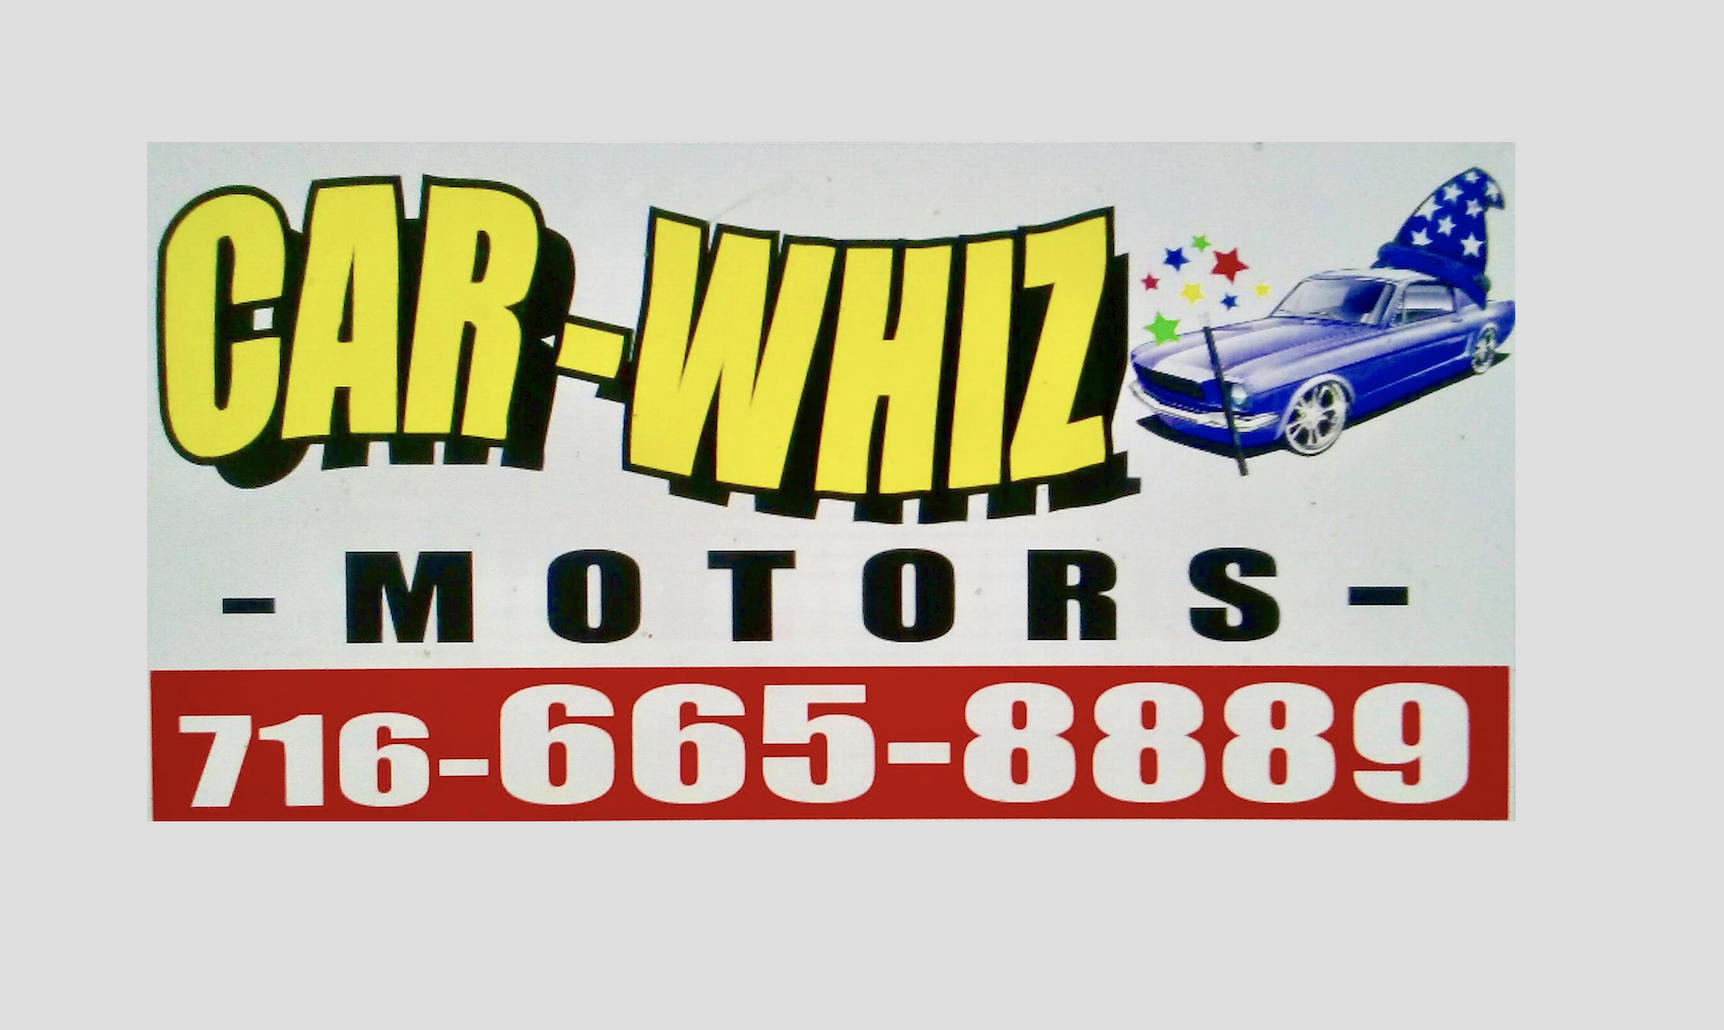 Car-Whiz Motors